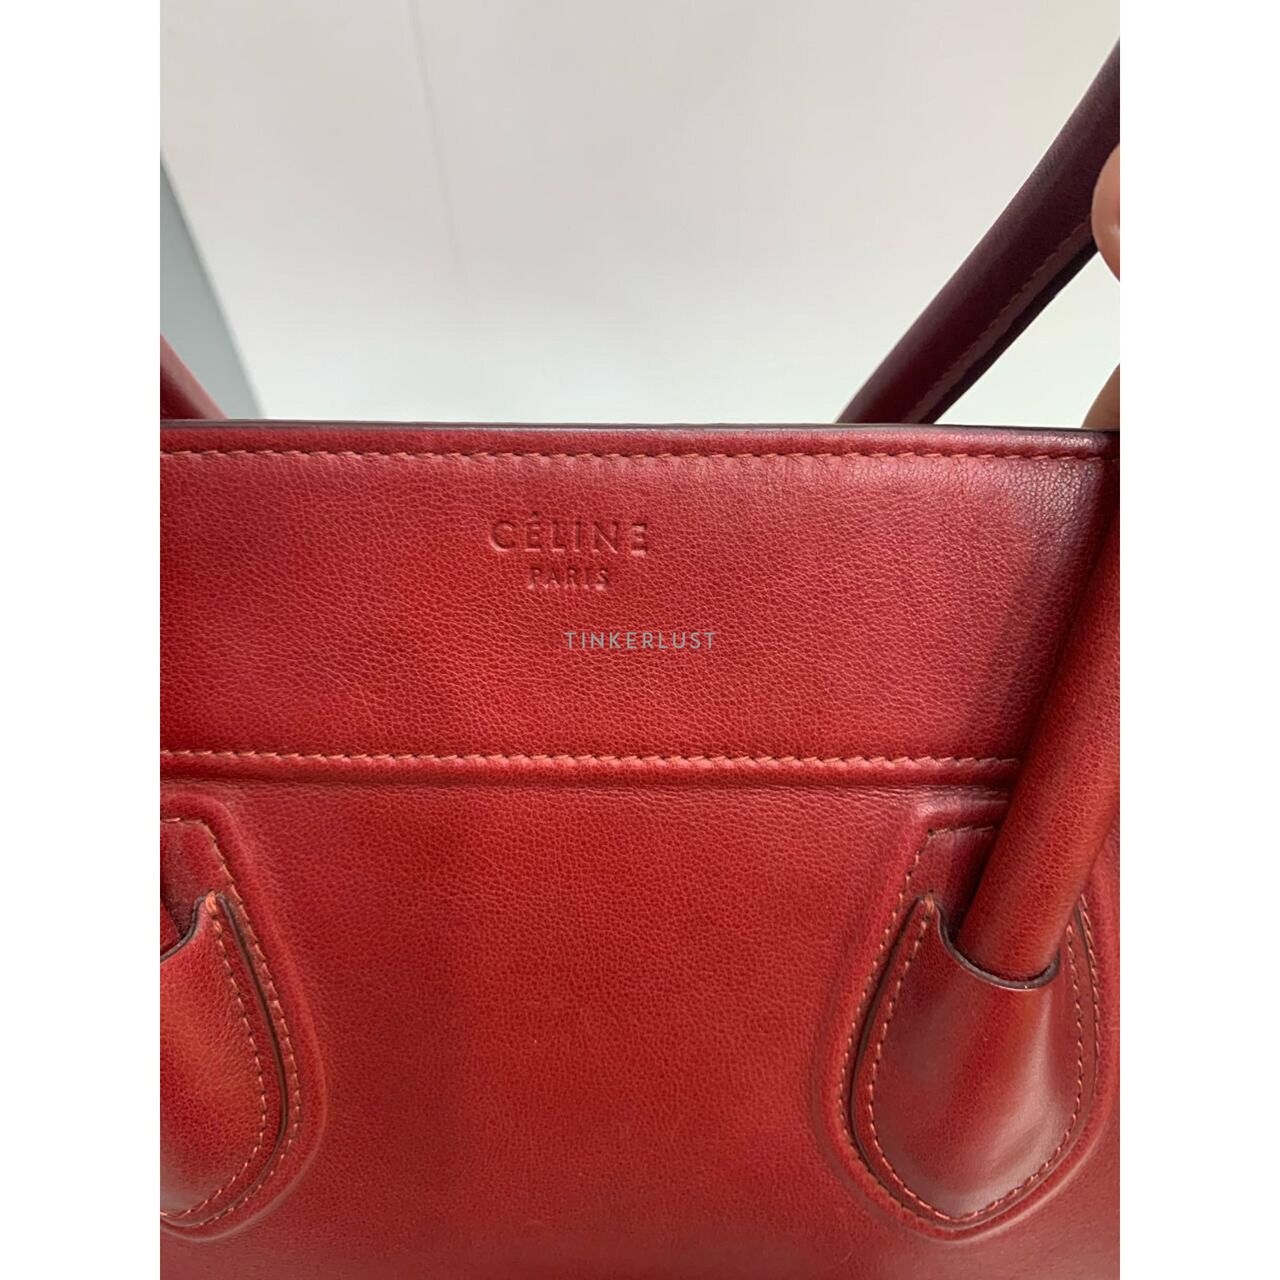 Celine Luggage Phantom Leather Red 2012 Handbag